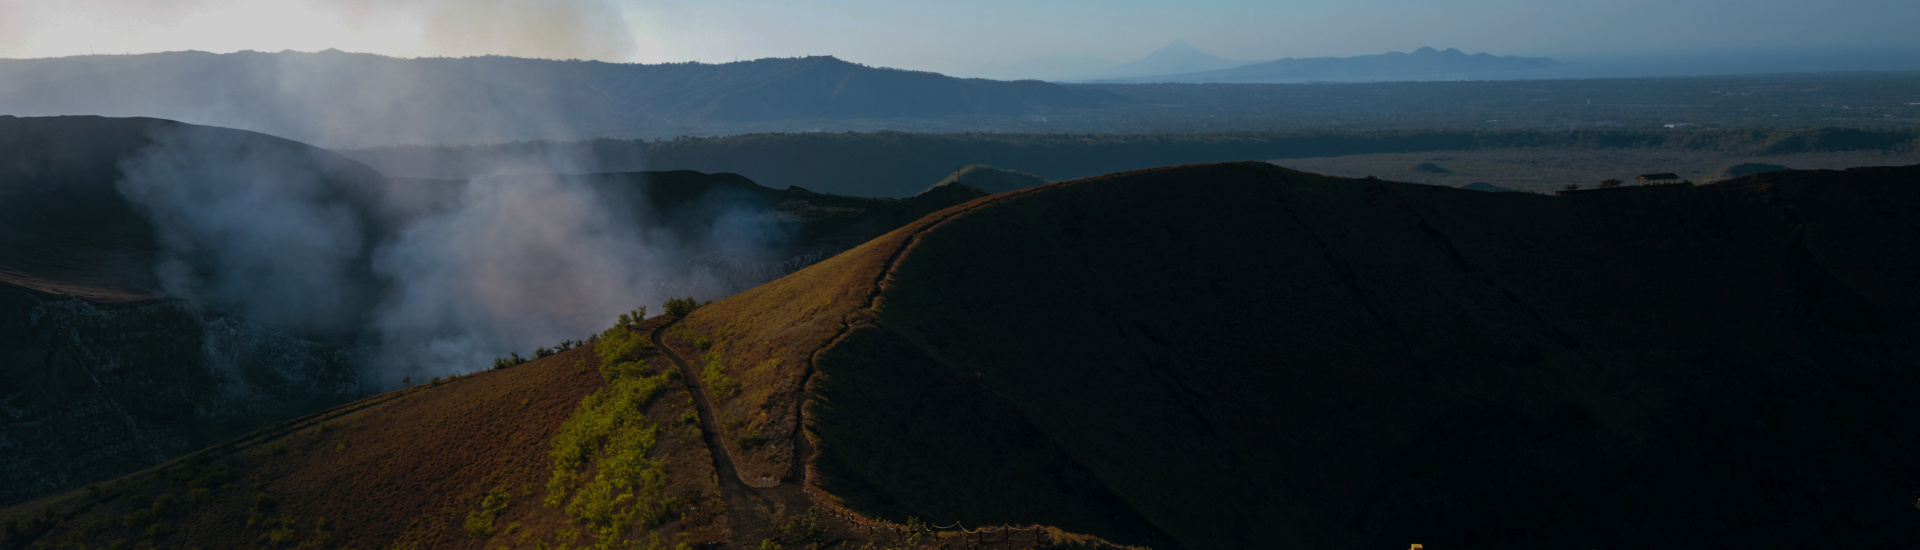 Vulkan mit Aktivität in Nicaragua